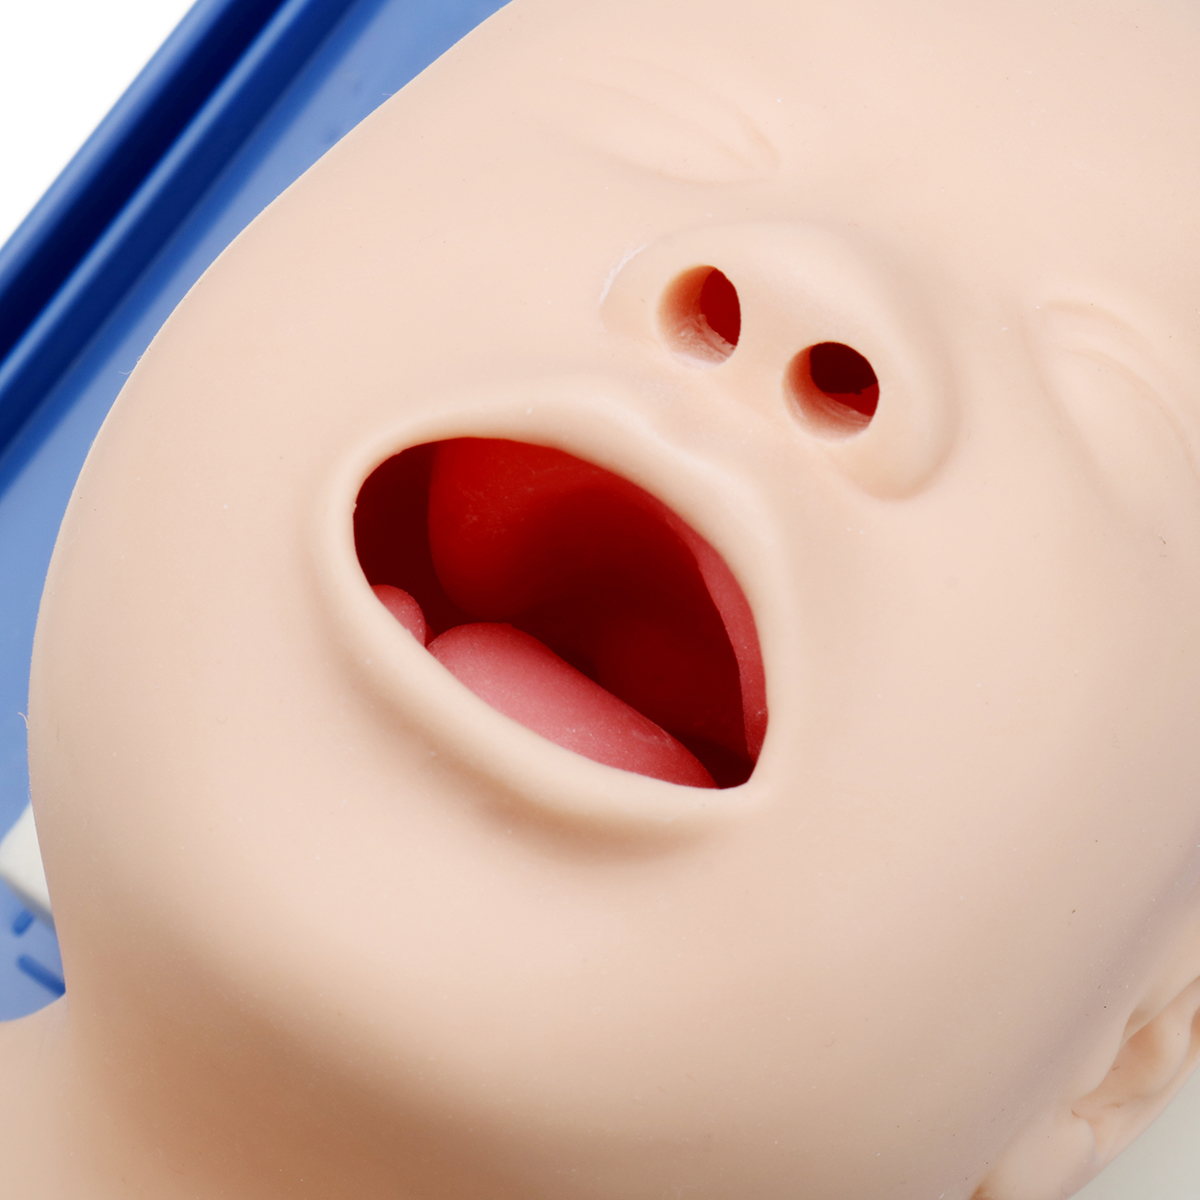 Intubation Manikin Study Teaching Model Baby Infant Airway Management Trainer Medical Model 74